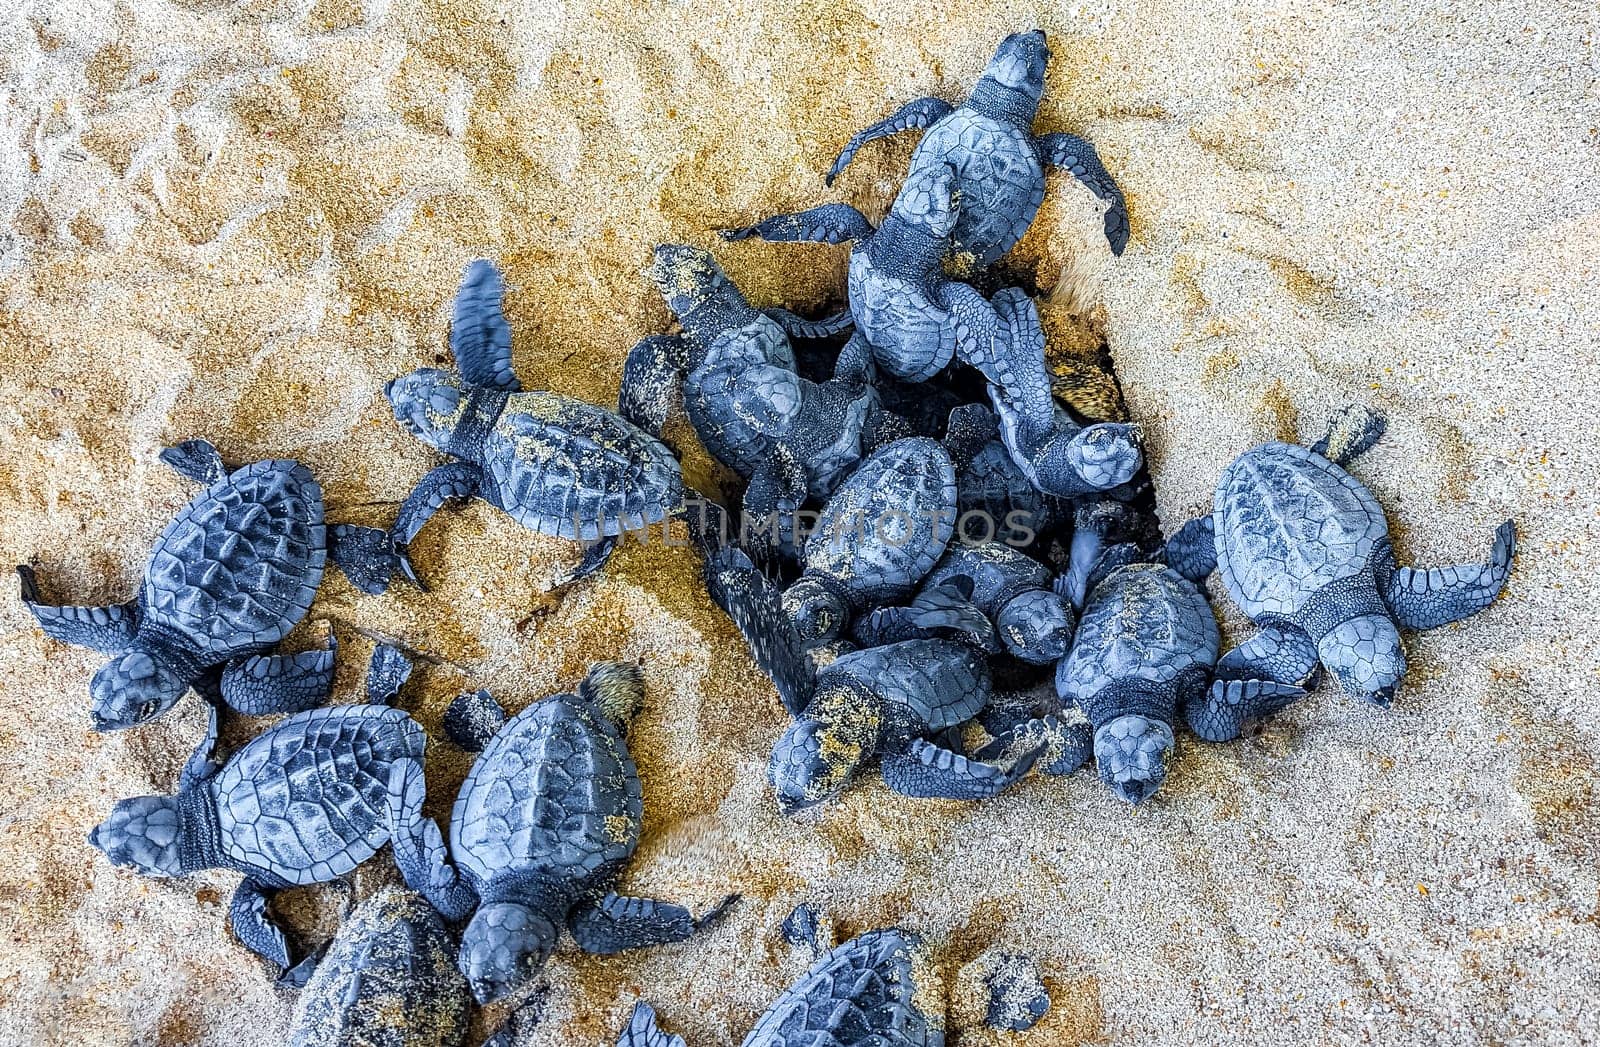 Small baby turtles crawl out sand Mirissa Beach Sri Lanka. by Arkadij